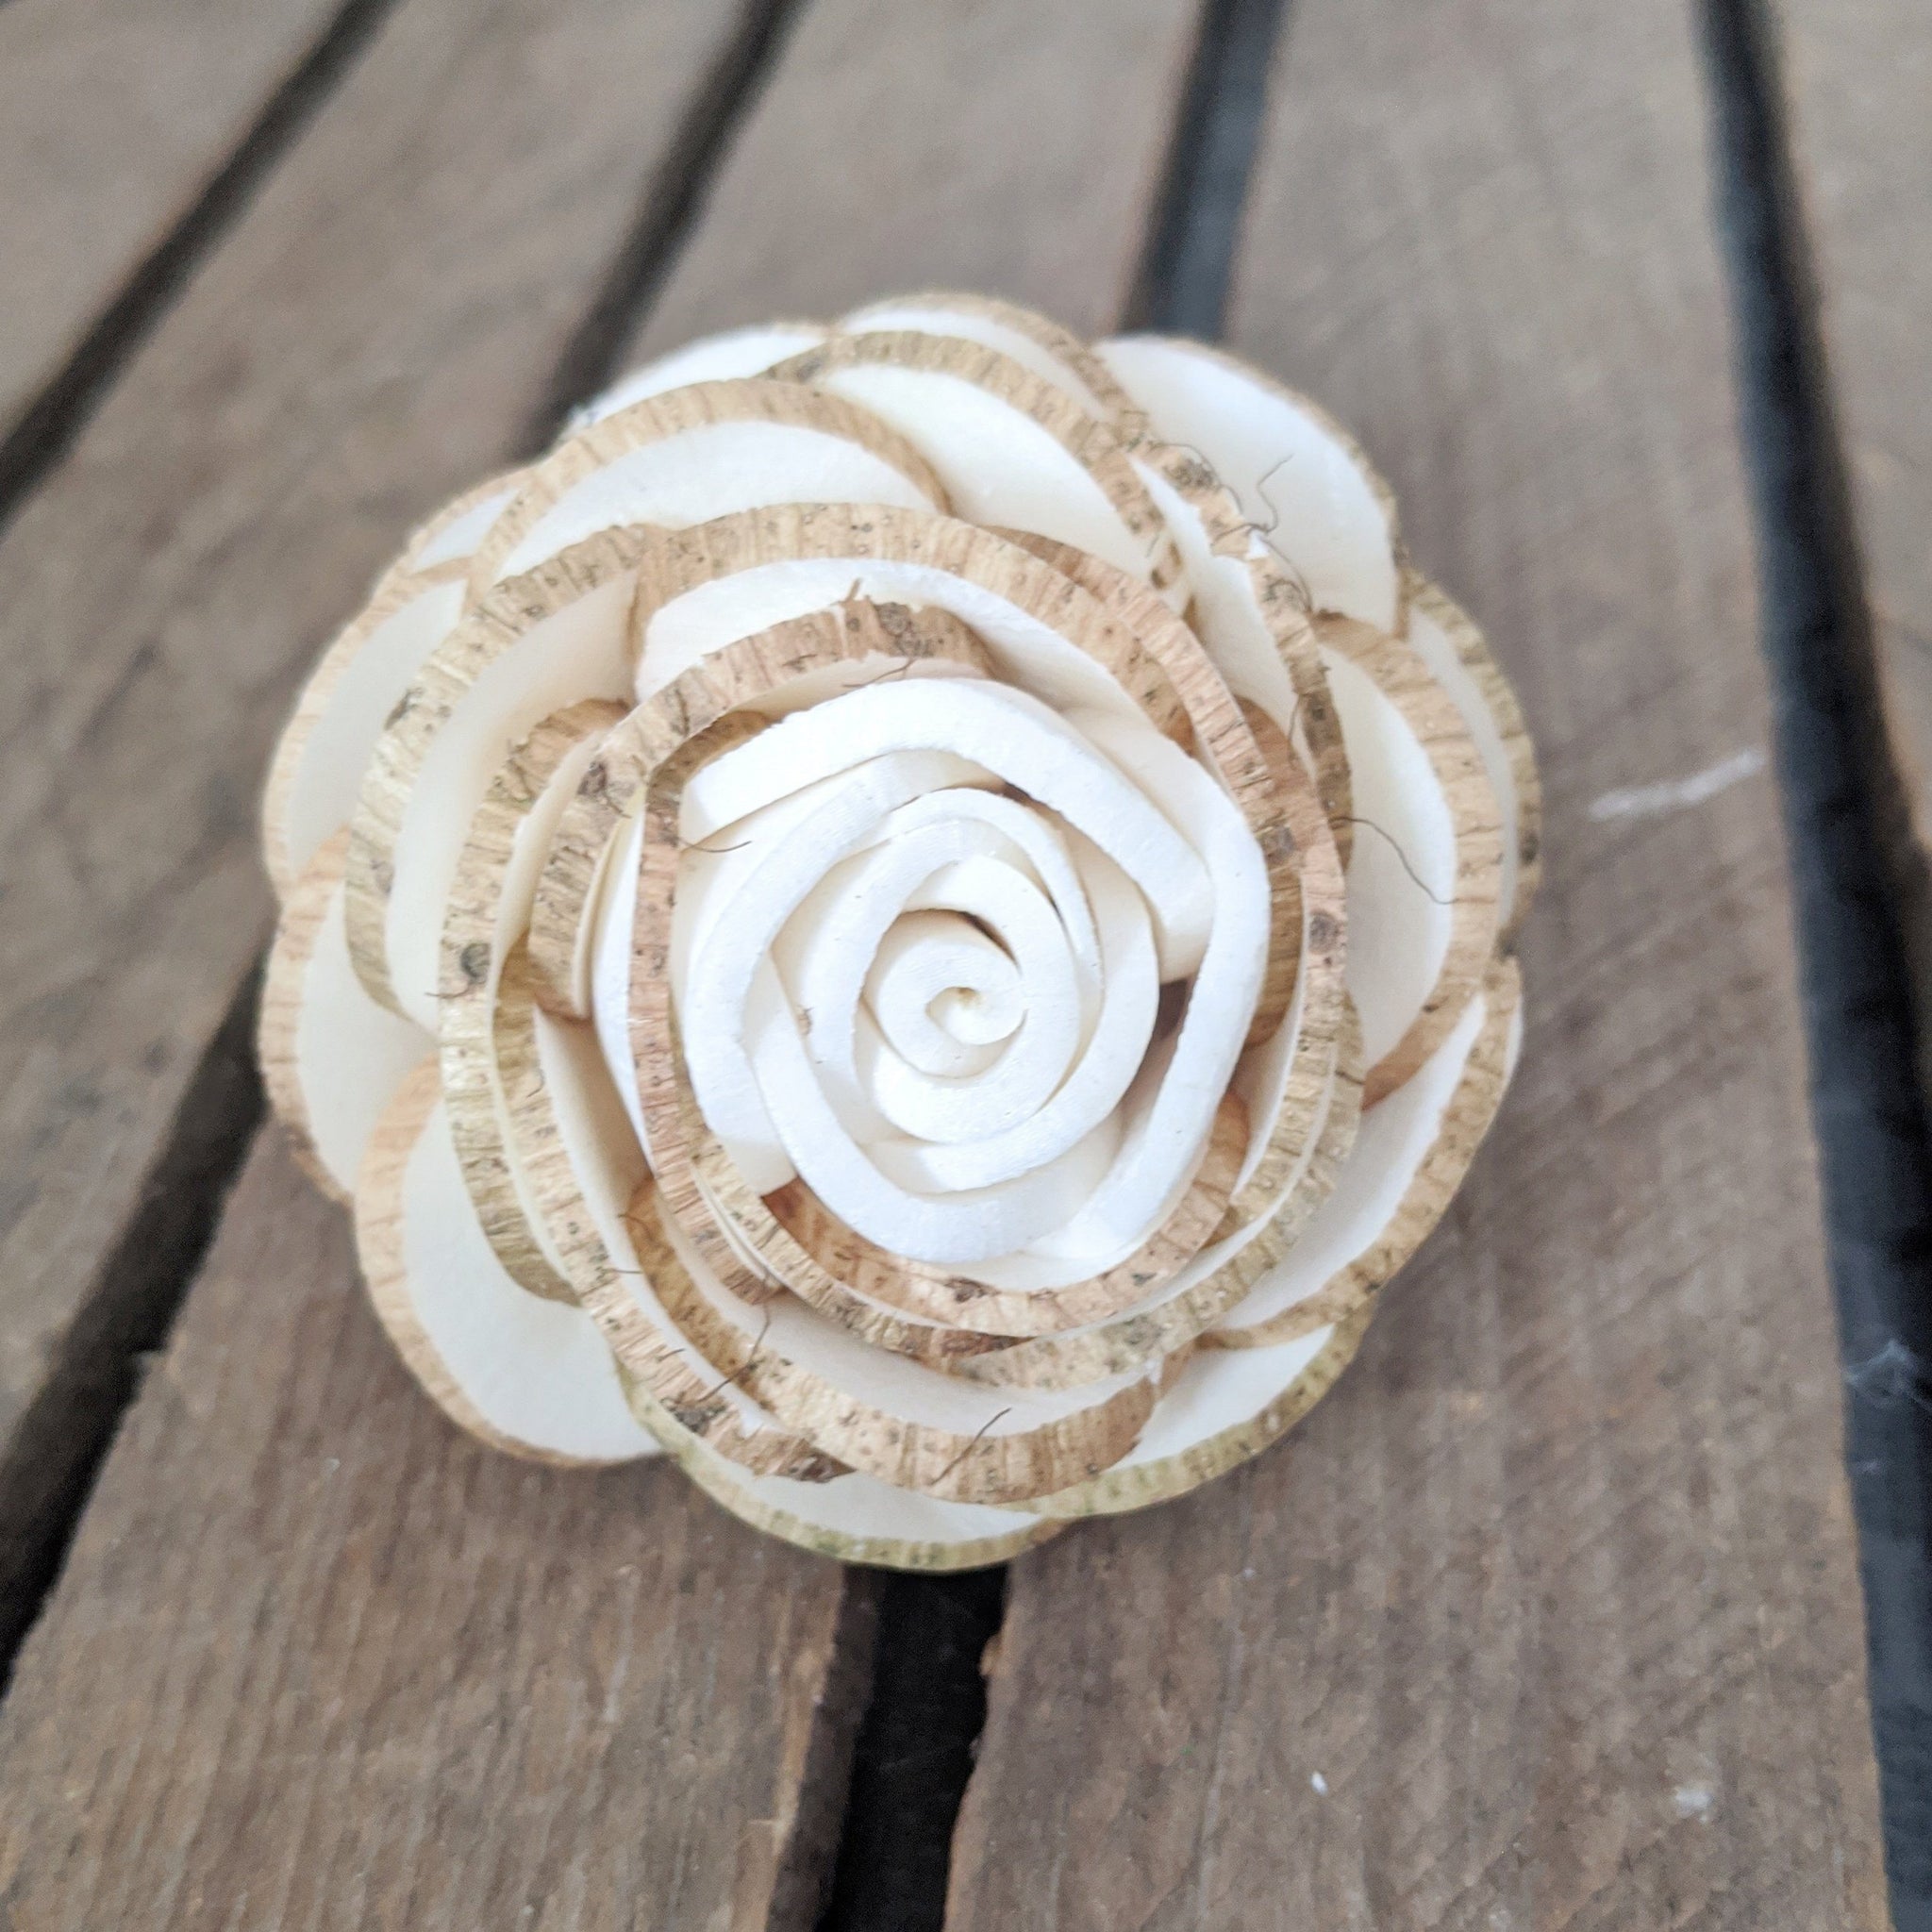 Mercury Rose- set of 12 - 2 inches - sola wood flowers wholesale